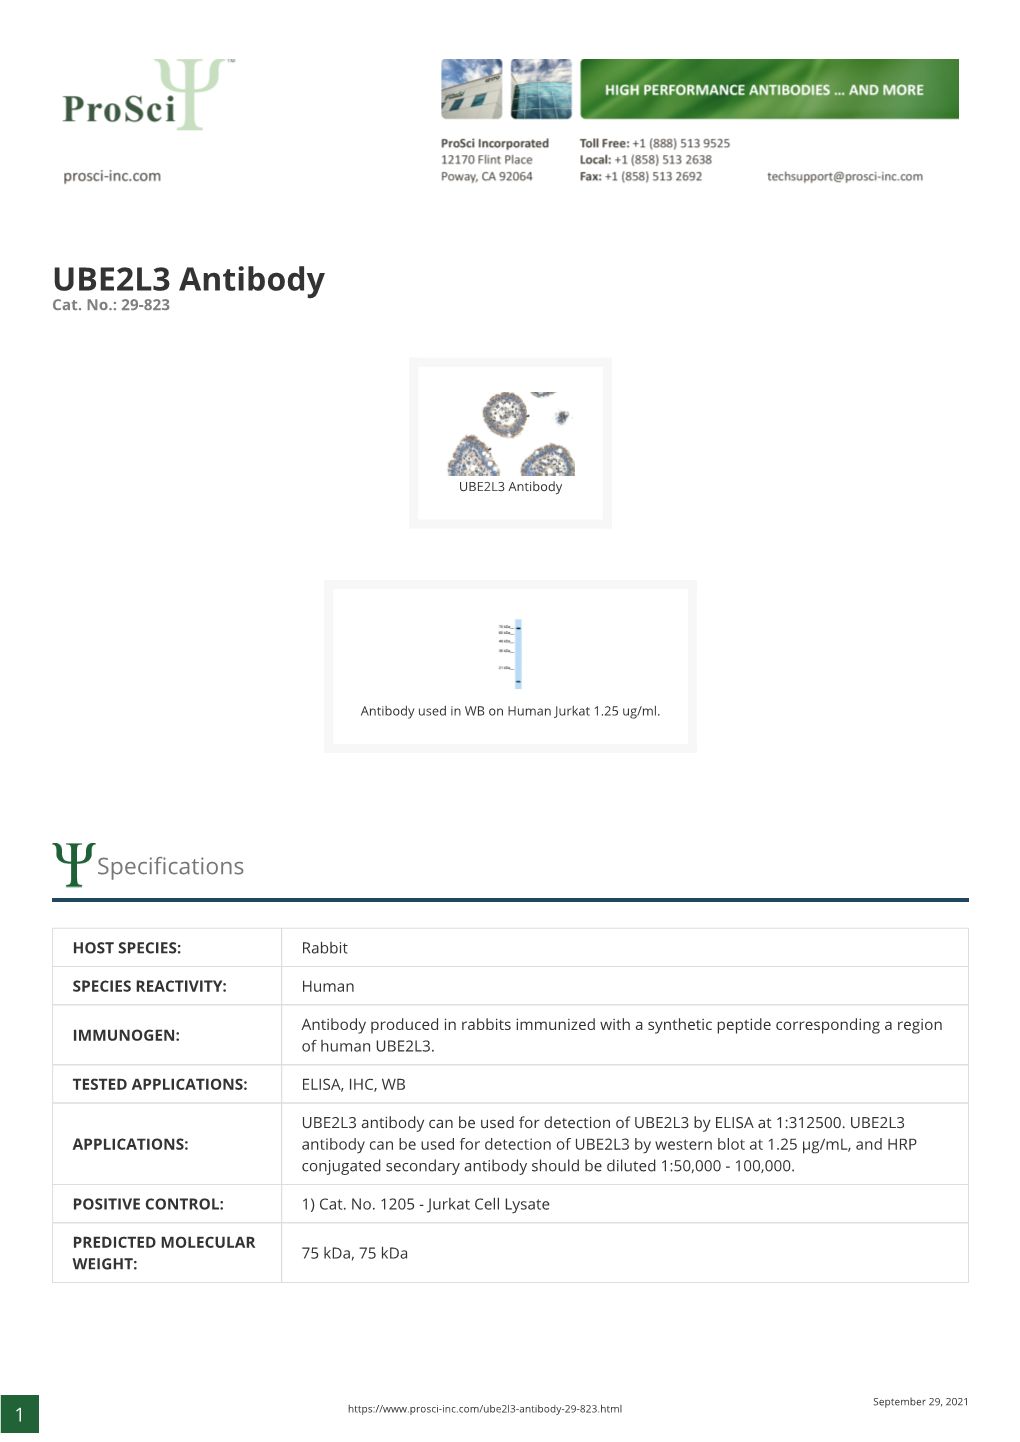 UBE2L3 Antibody Cat